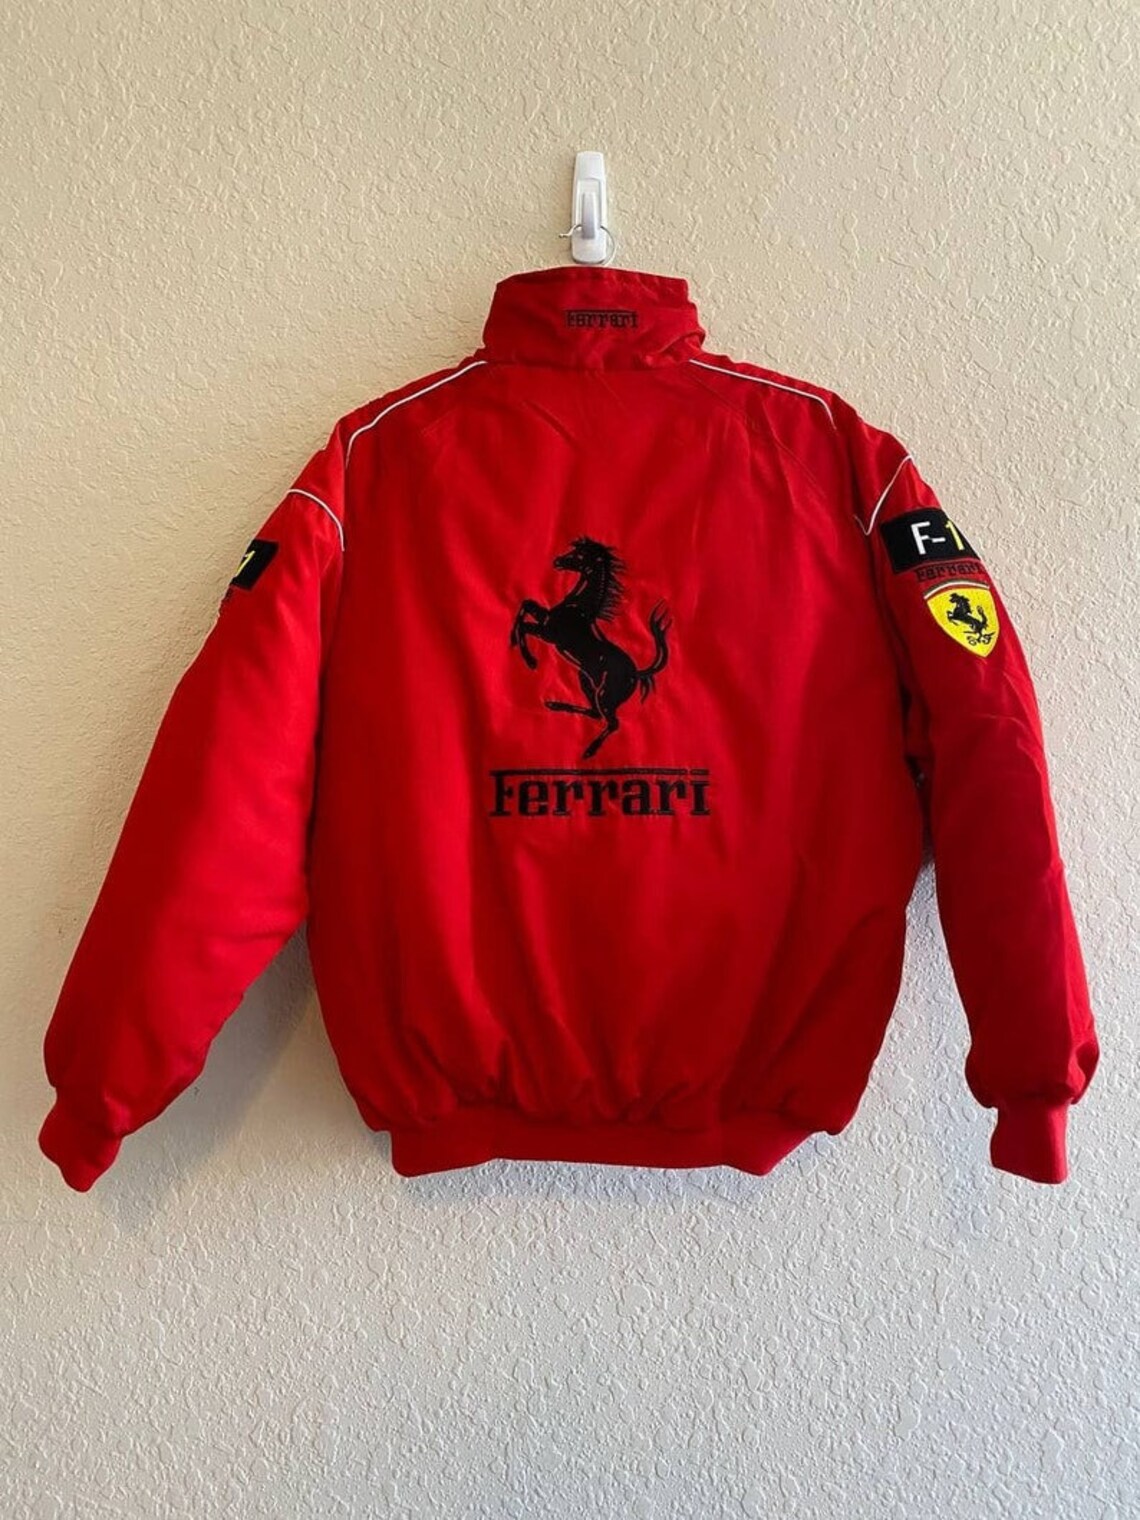 Ferrari Nascar F1 Racing Jacket Vintage Harajuku Racing Jacket | Etsy